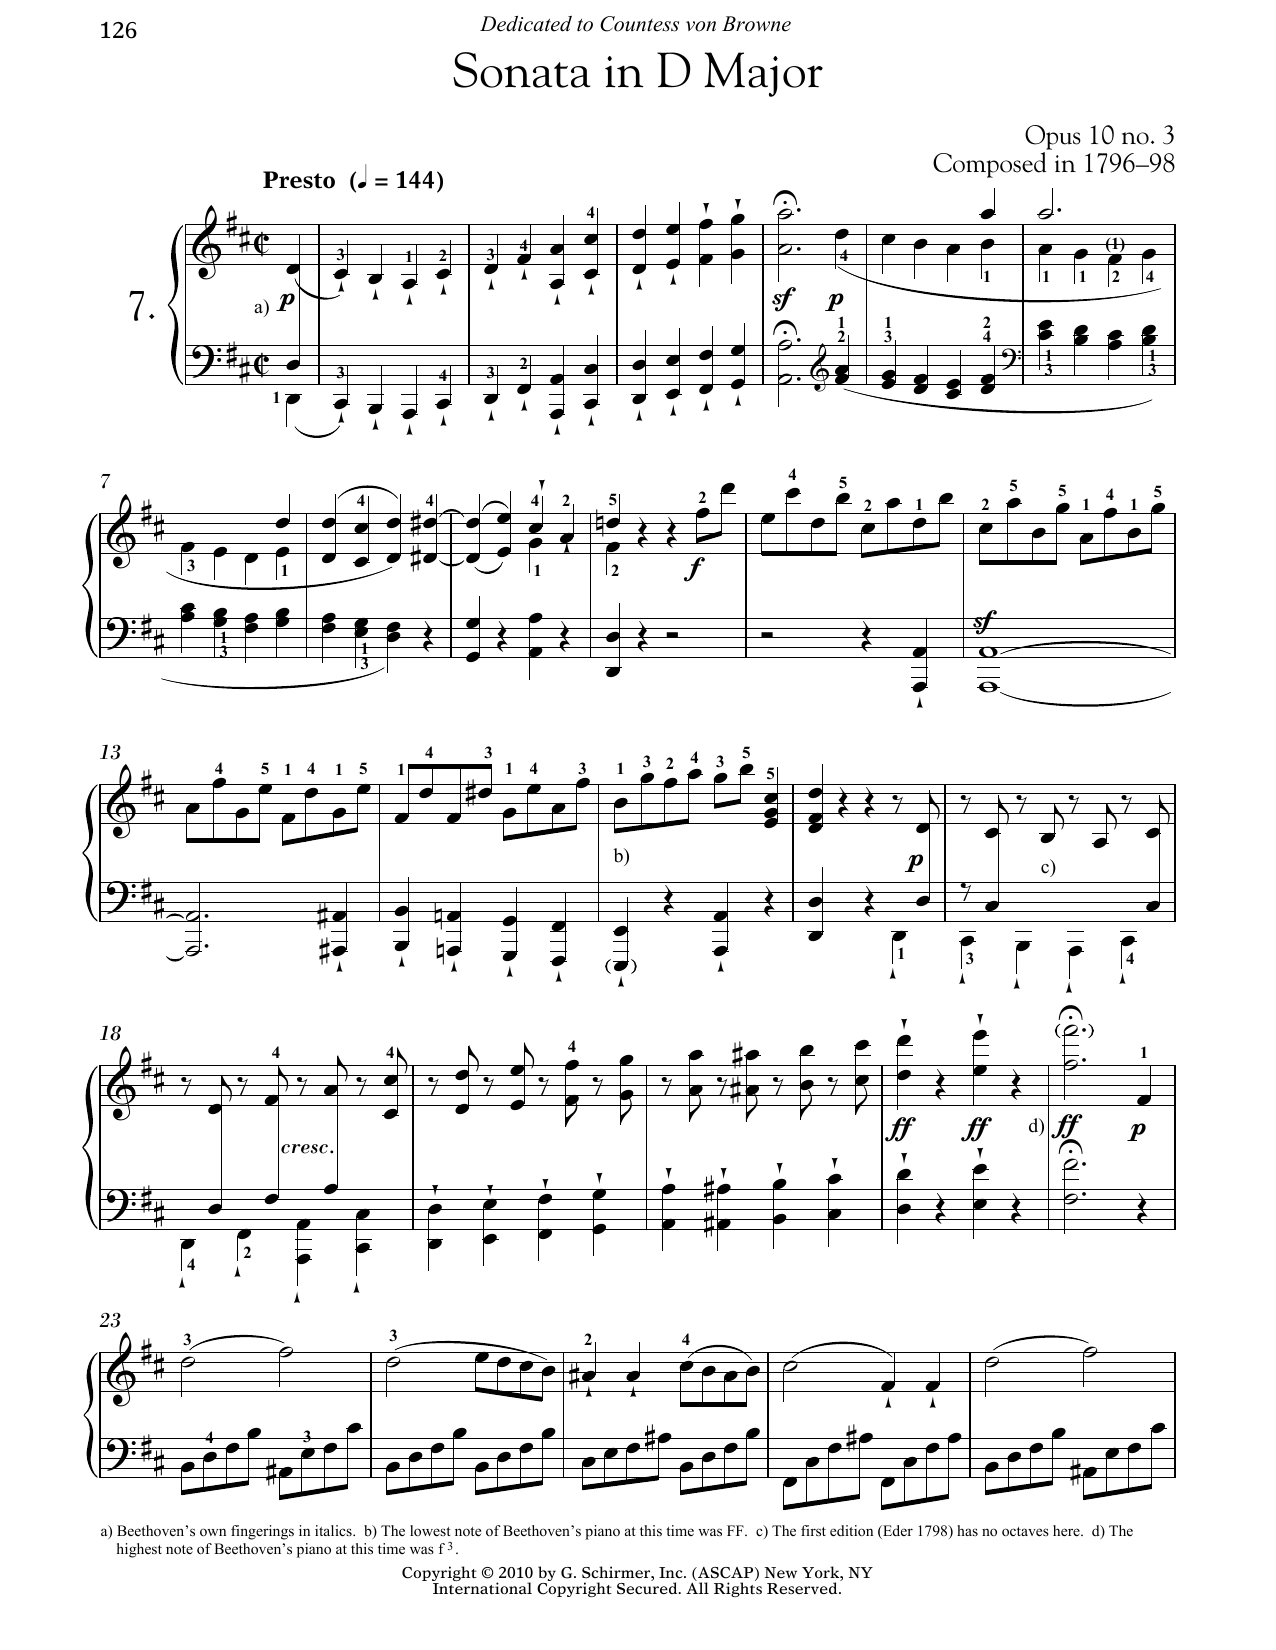 Ludwig van Beethoven Piano Sonata No. 7 In D Major, Op. 10, No. 3 Sheet Music Notes & Chords for Piano - Download or Print PDF